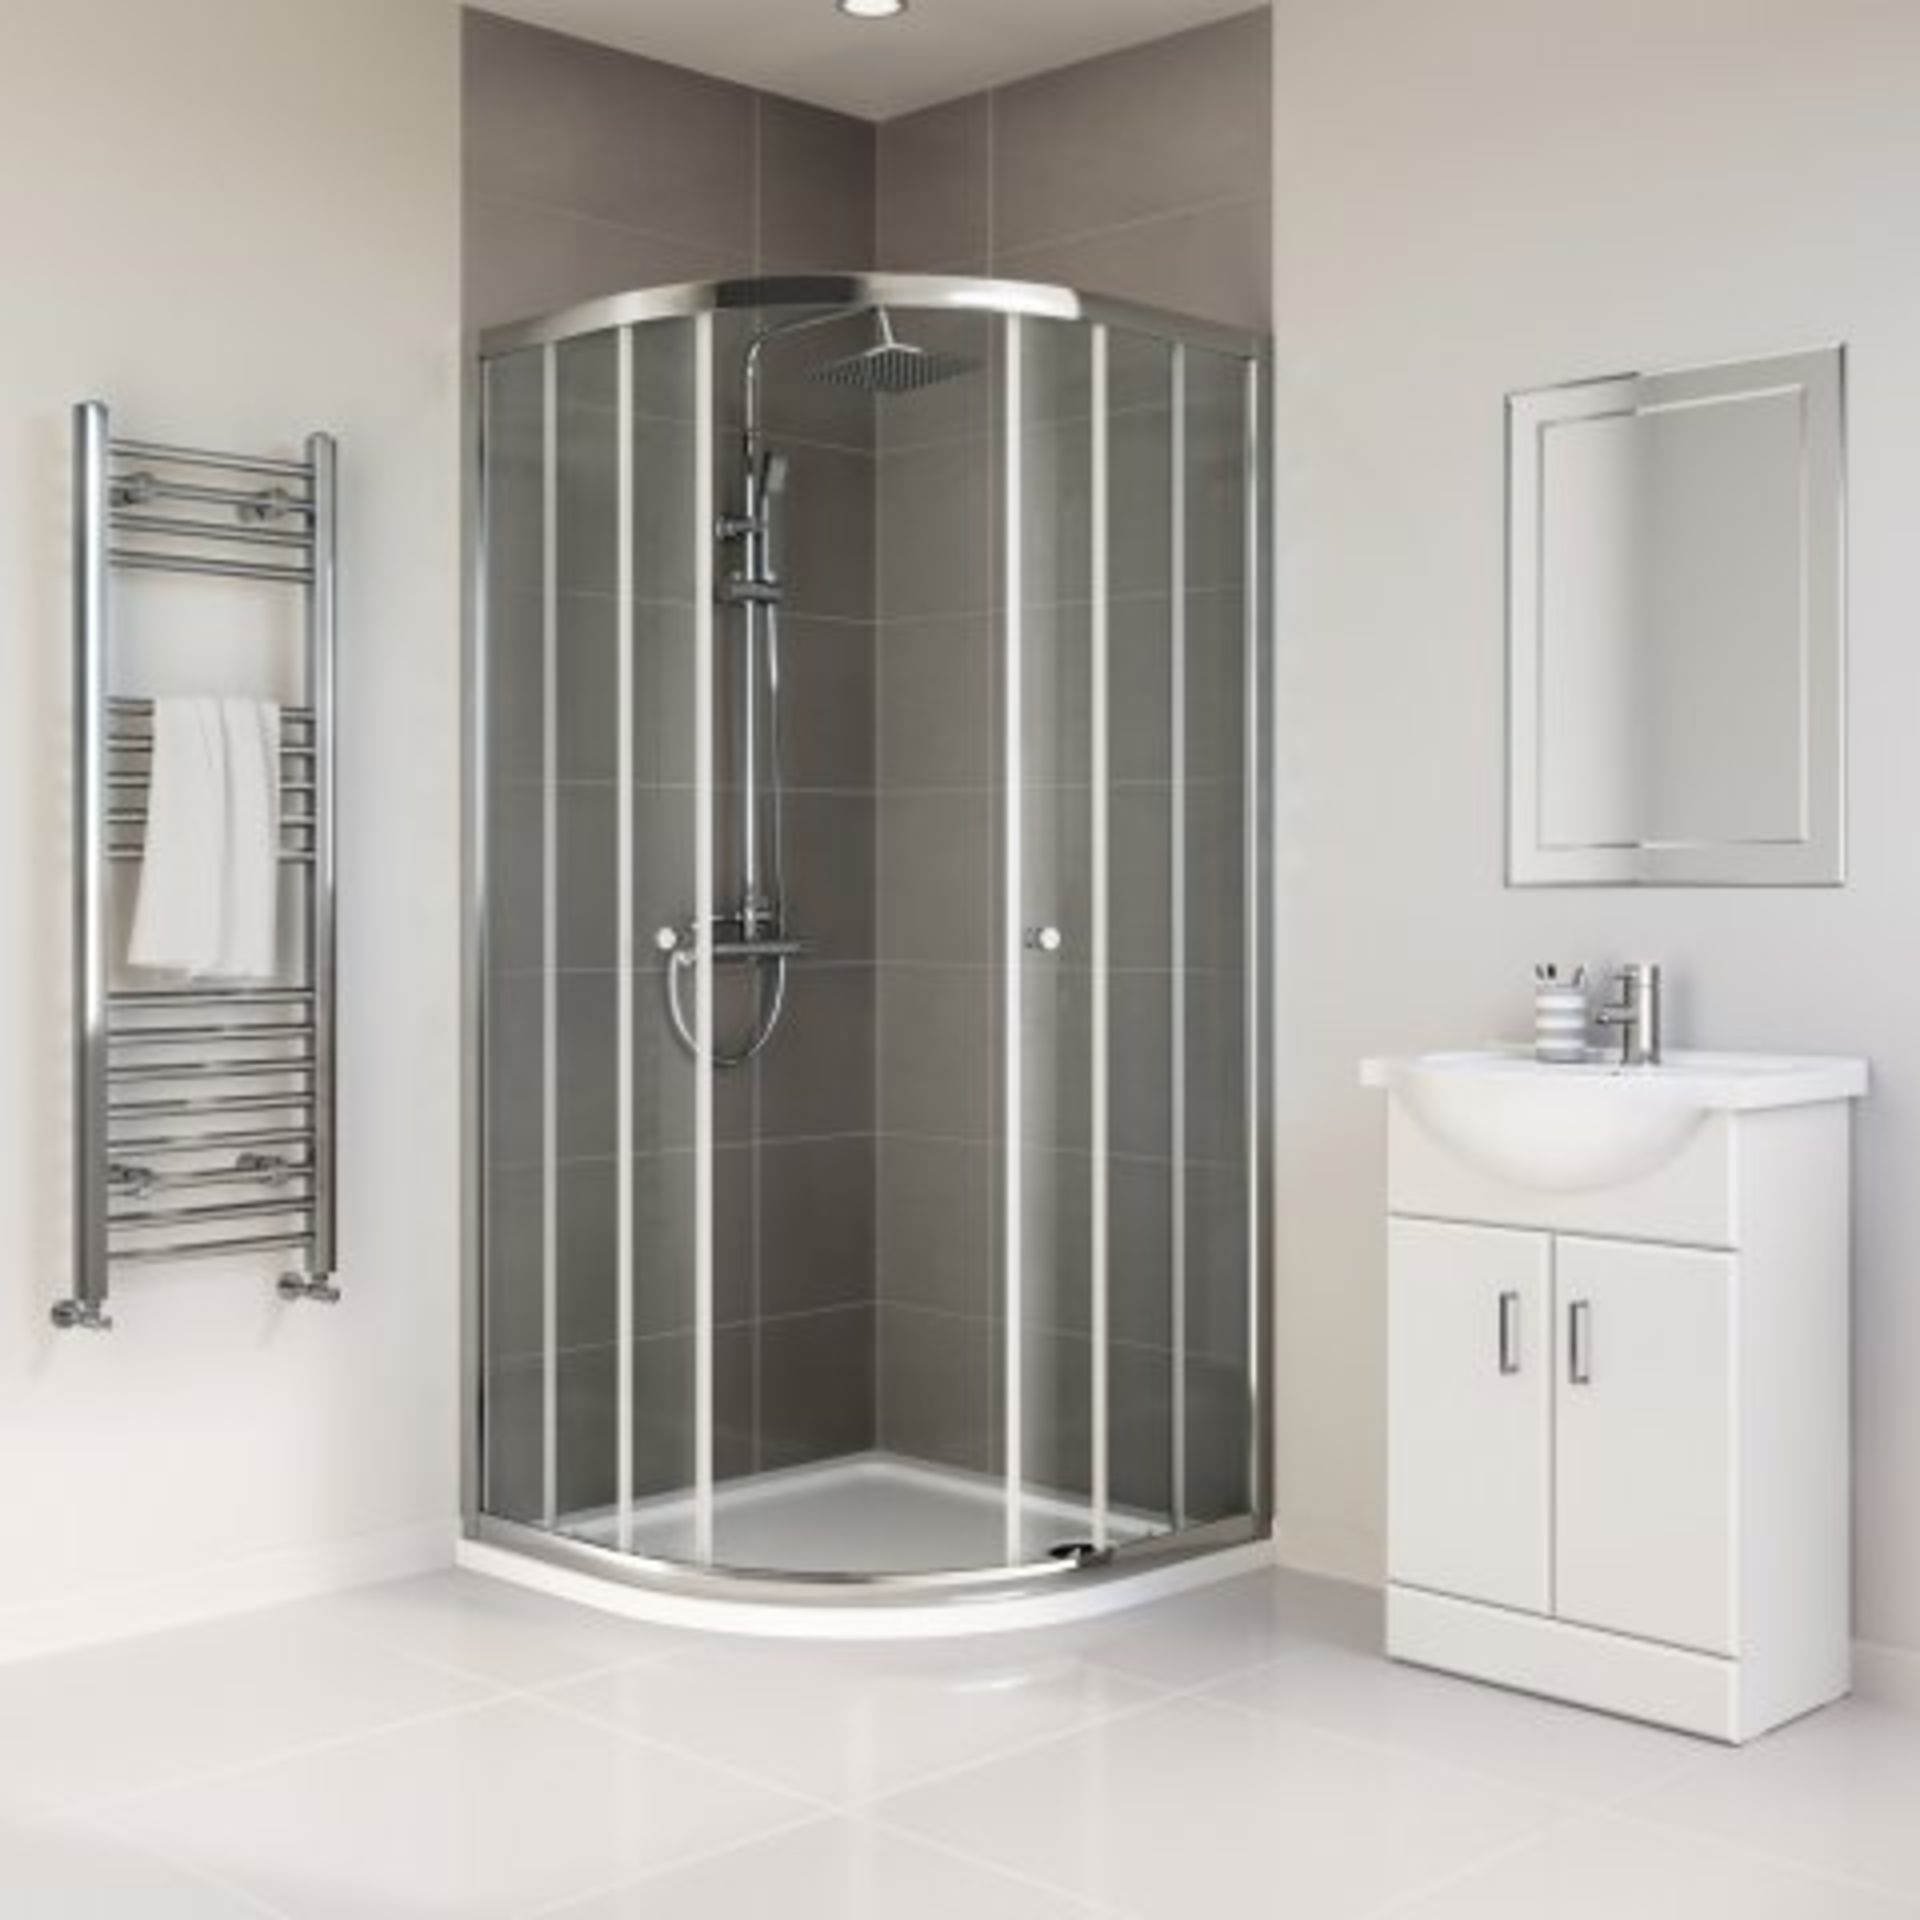 New (F137) 1000x1000 mm - Elements Quadrant Shower Enclosure. RRP £429.99.Shower Enclosures F - Image 2 of 2